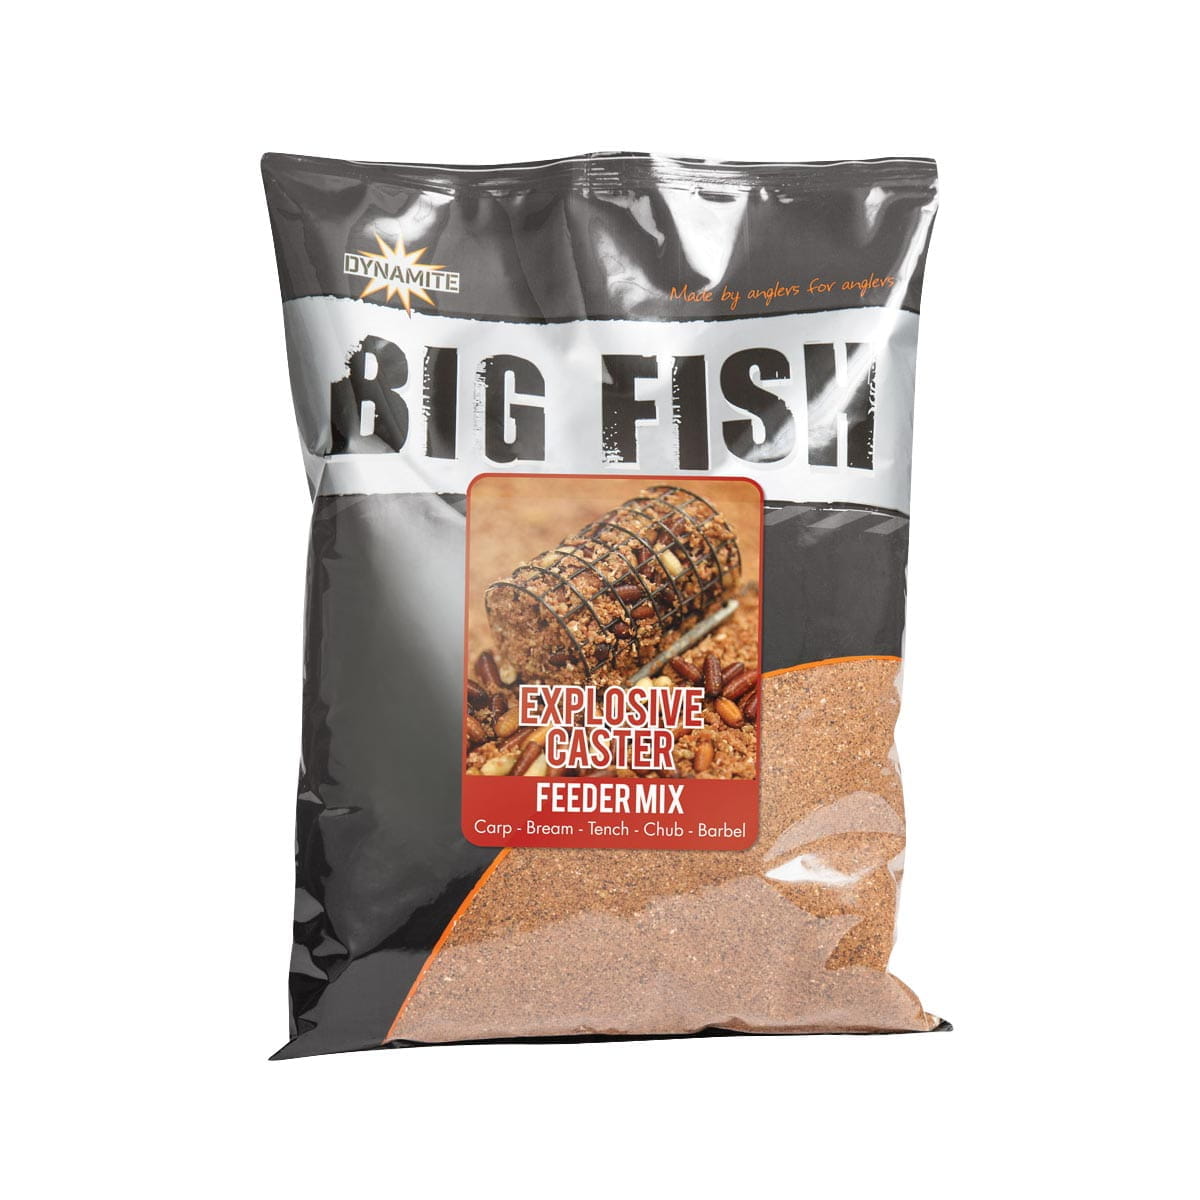 Big Fish GB - Explosive Caster Feeder Mix